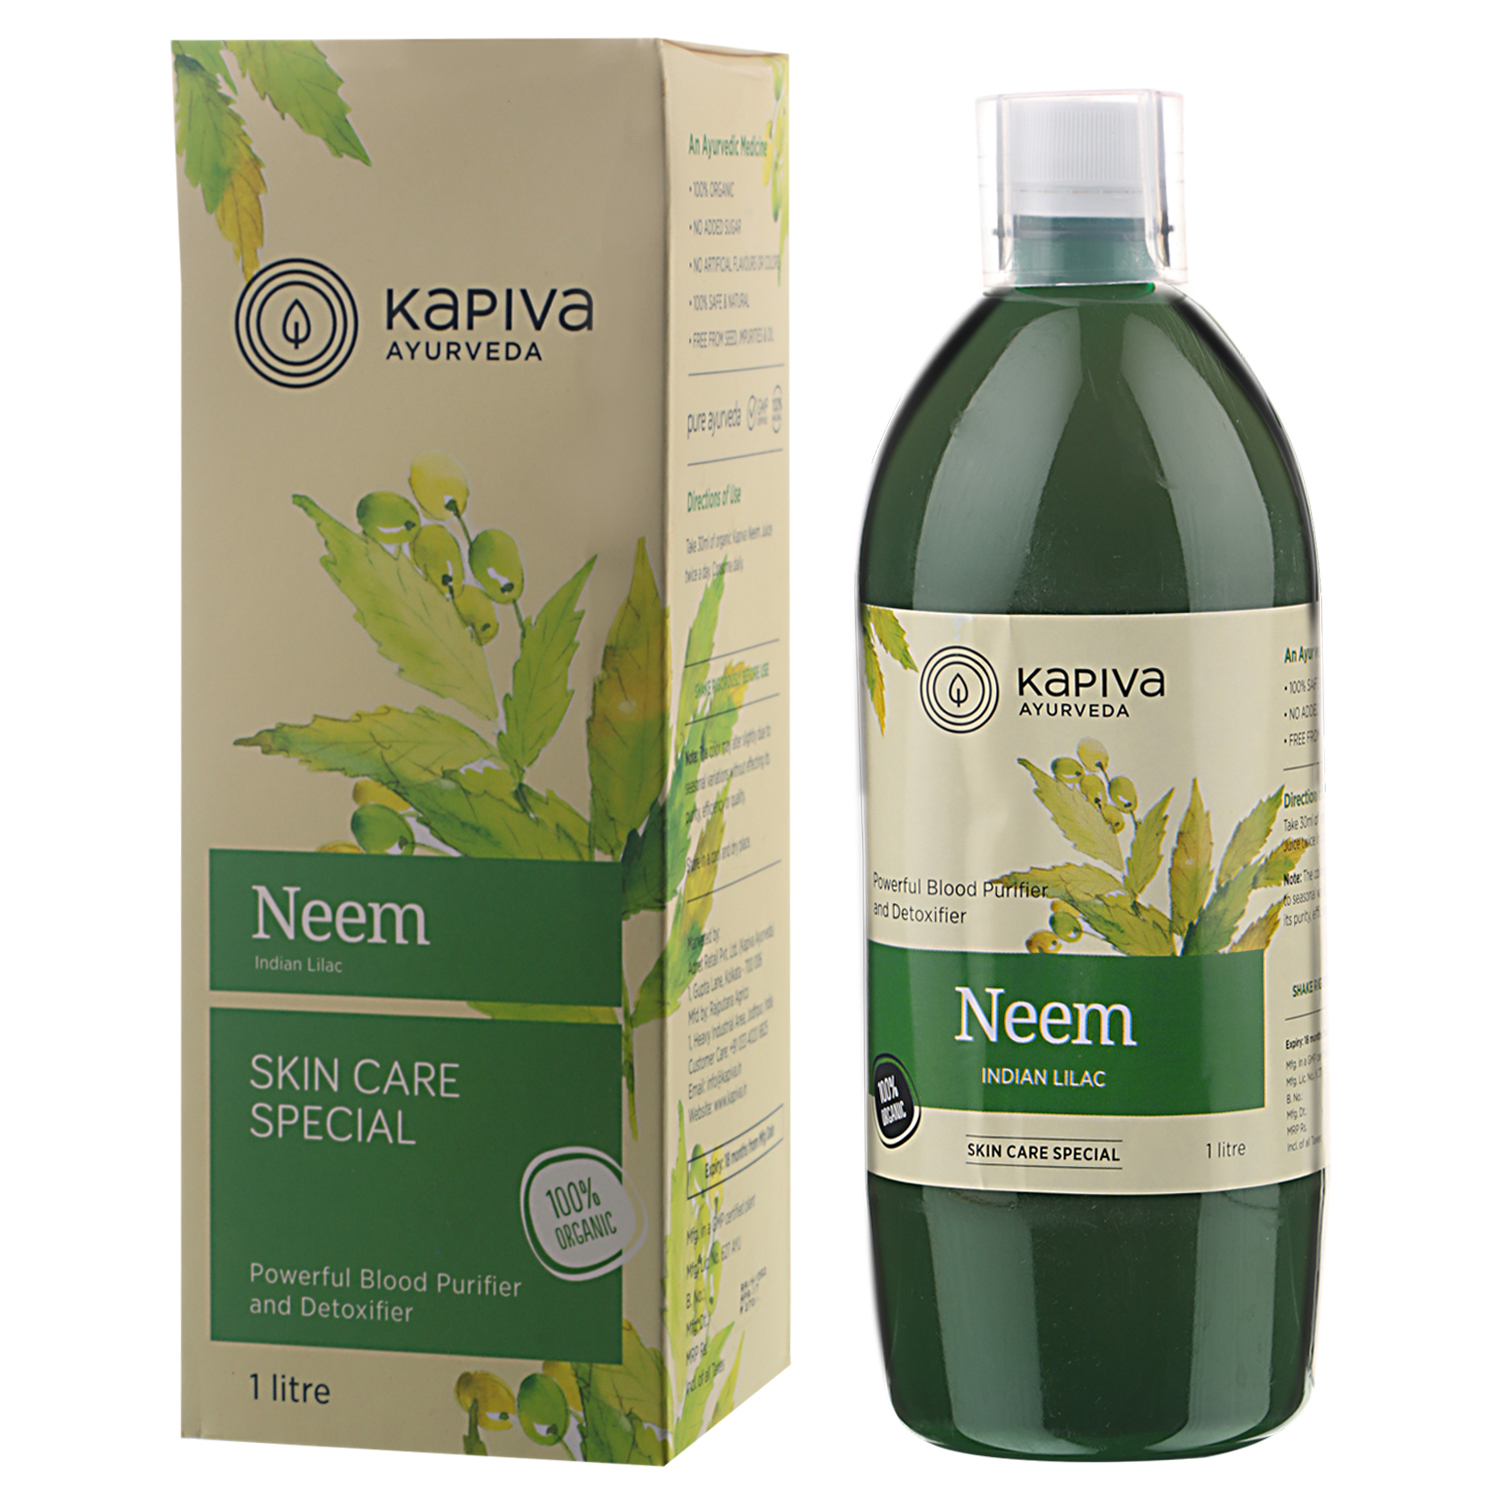 Buy Kapiva Neem Juice at Best Price Online